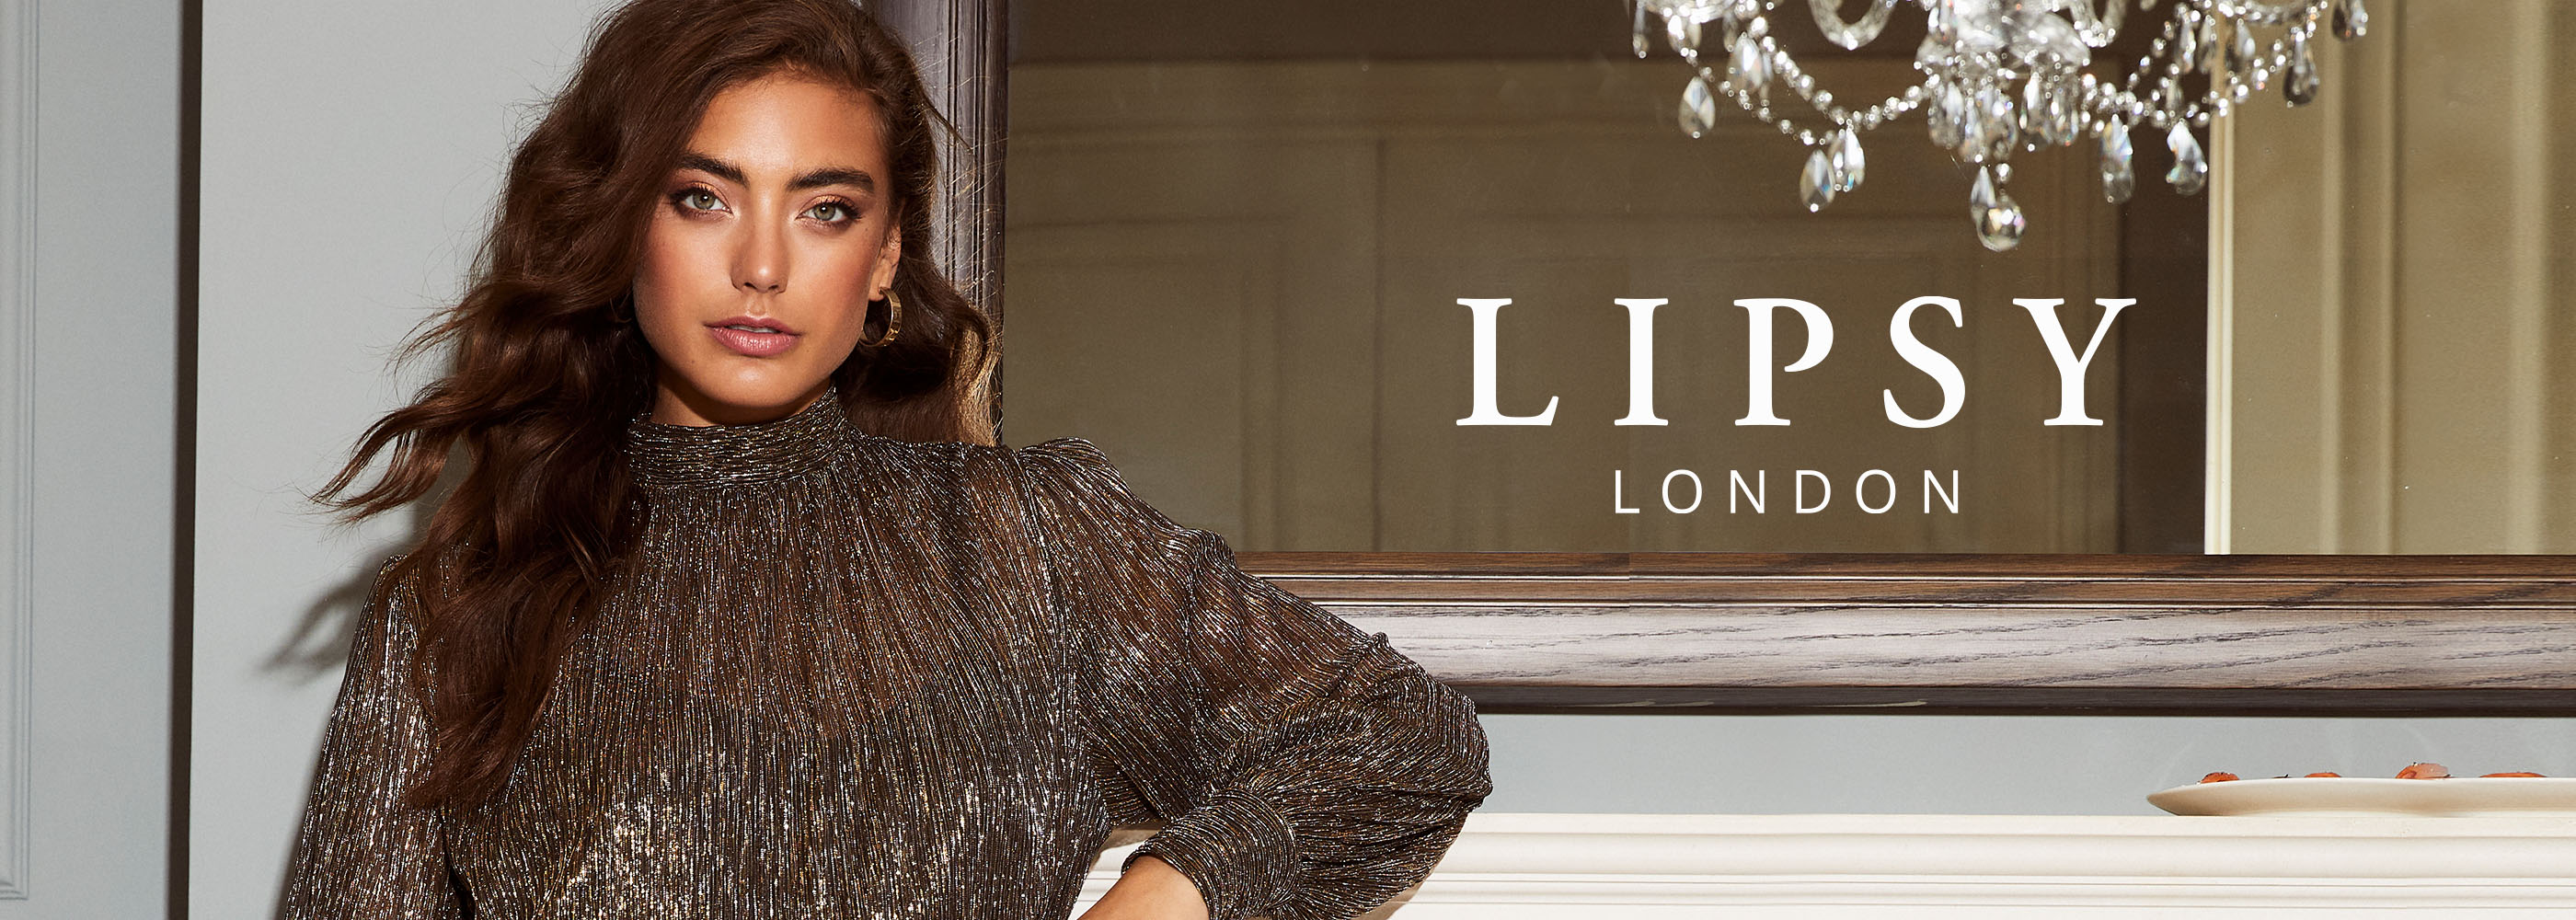 Lipsy London Collection | New Season 